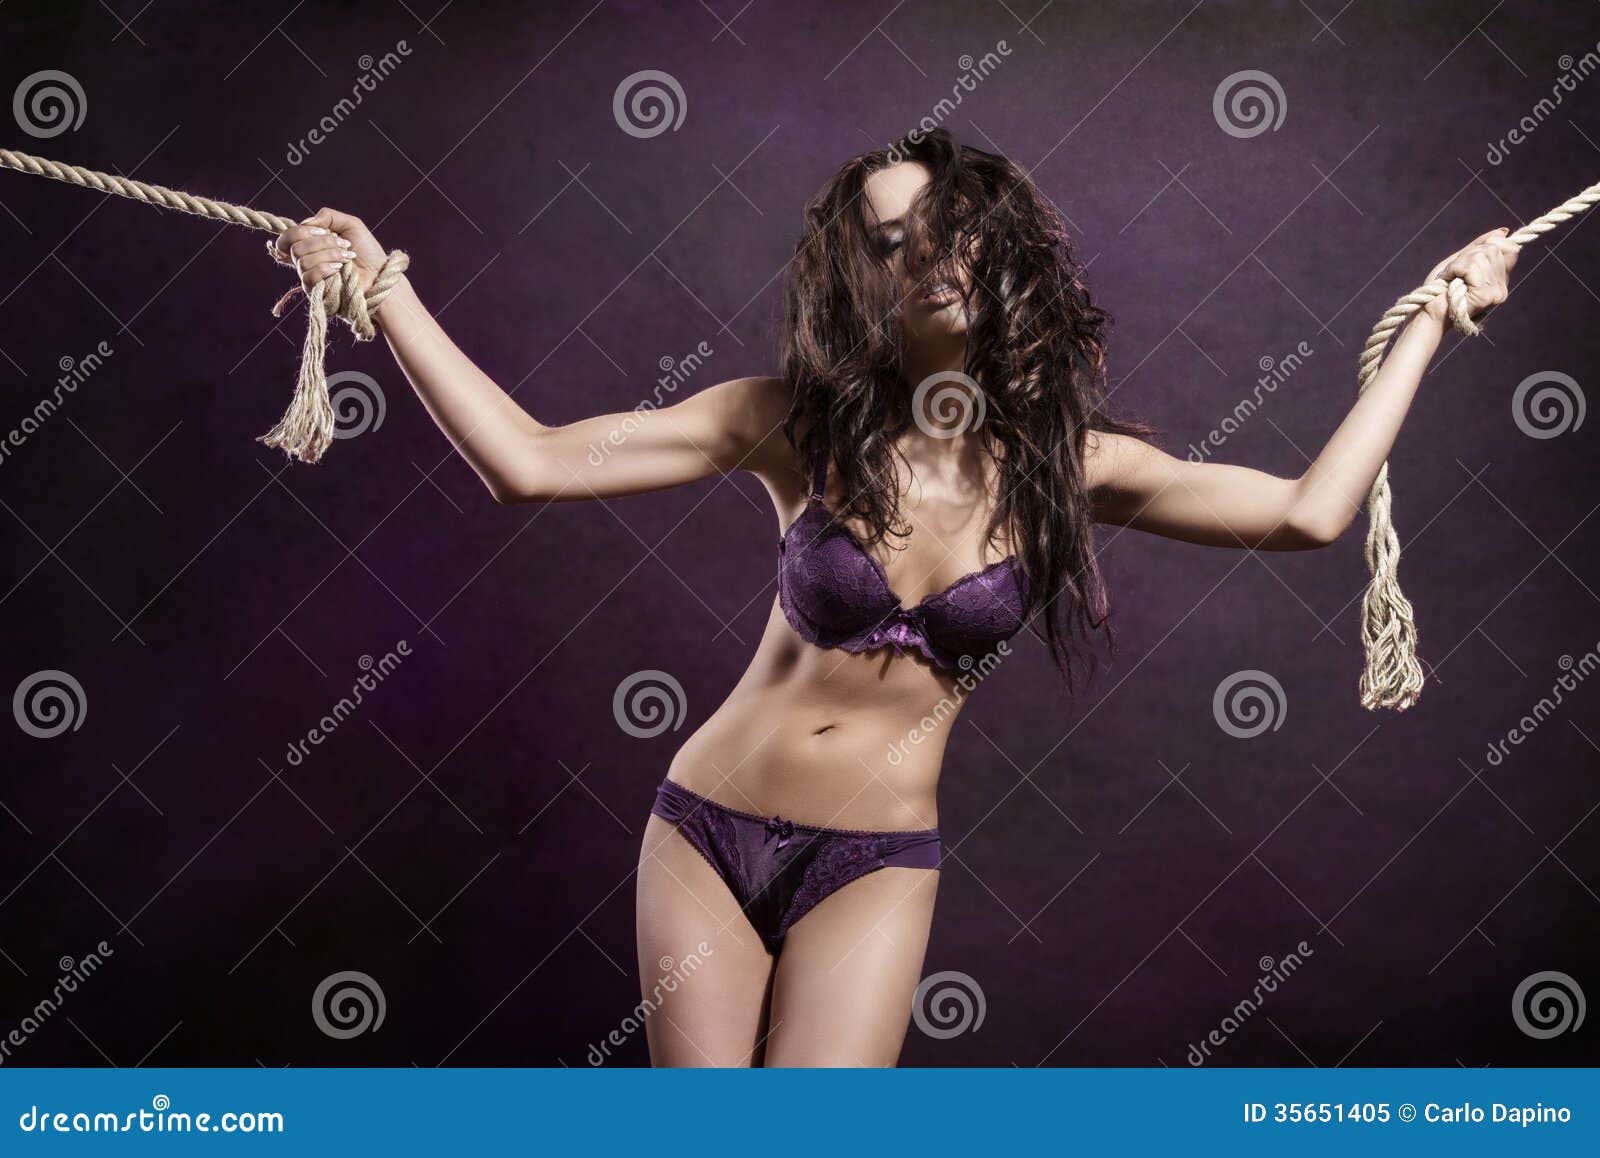 bernie mullaney add sexy woman tied up photo